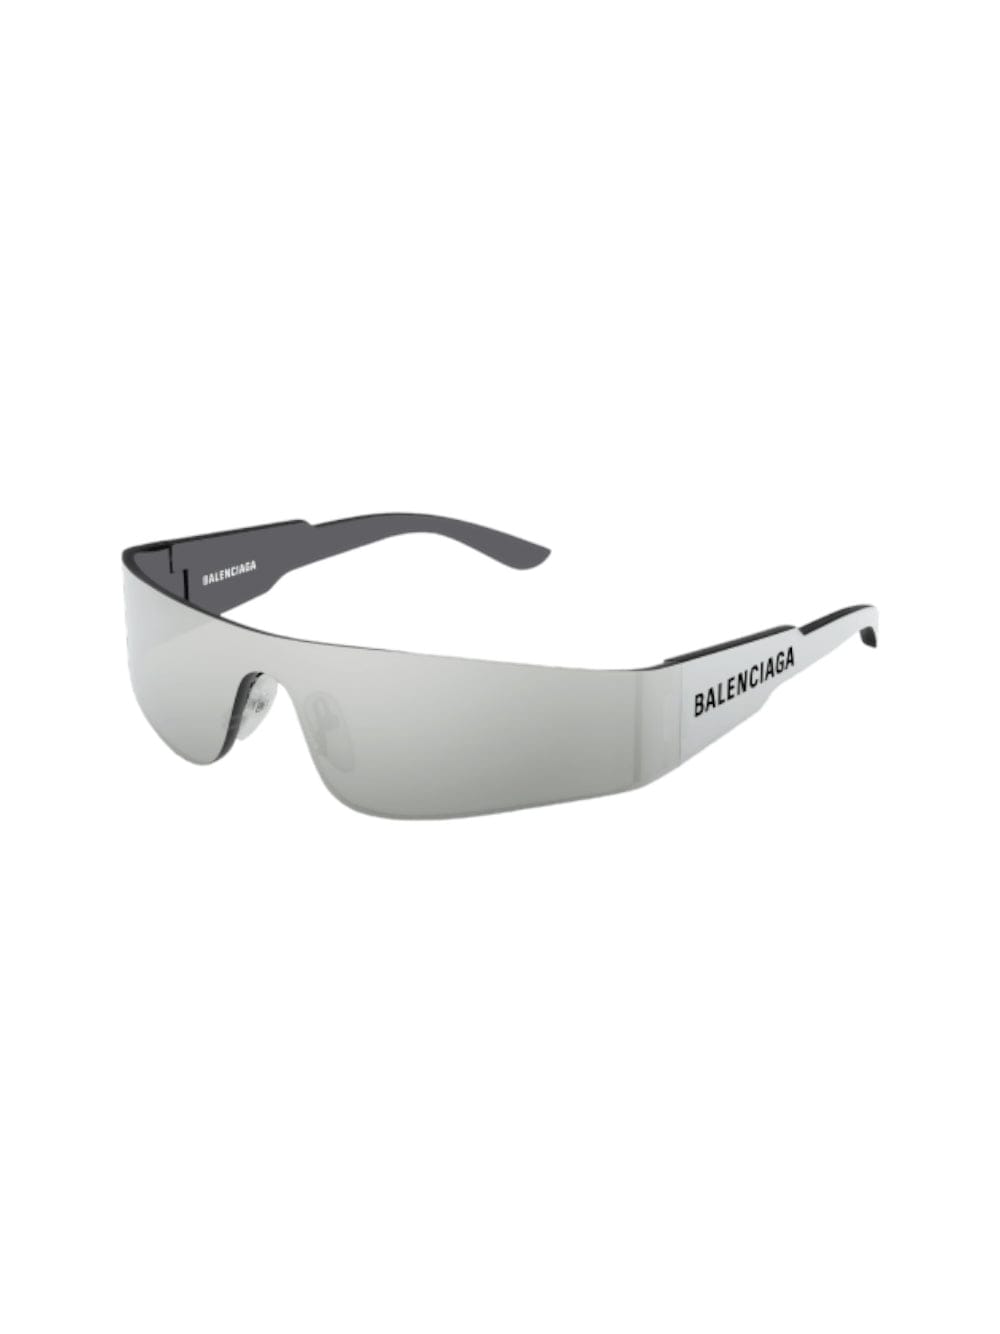 Balenciaga Bb0041s - Silver Sunglasses